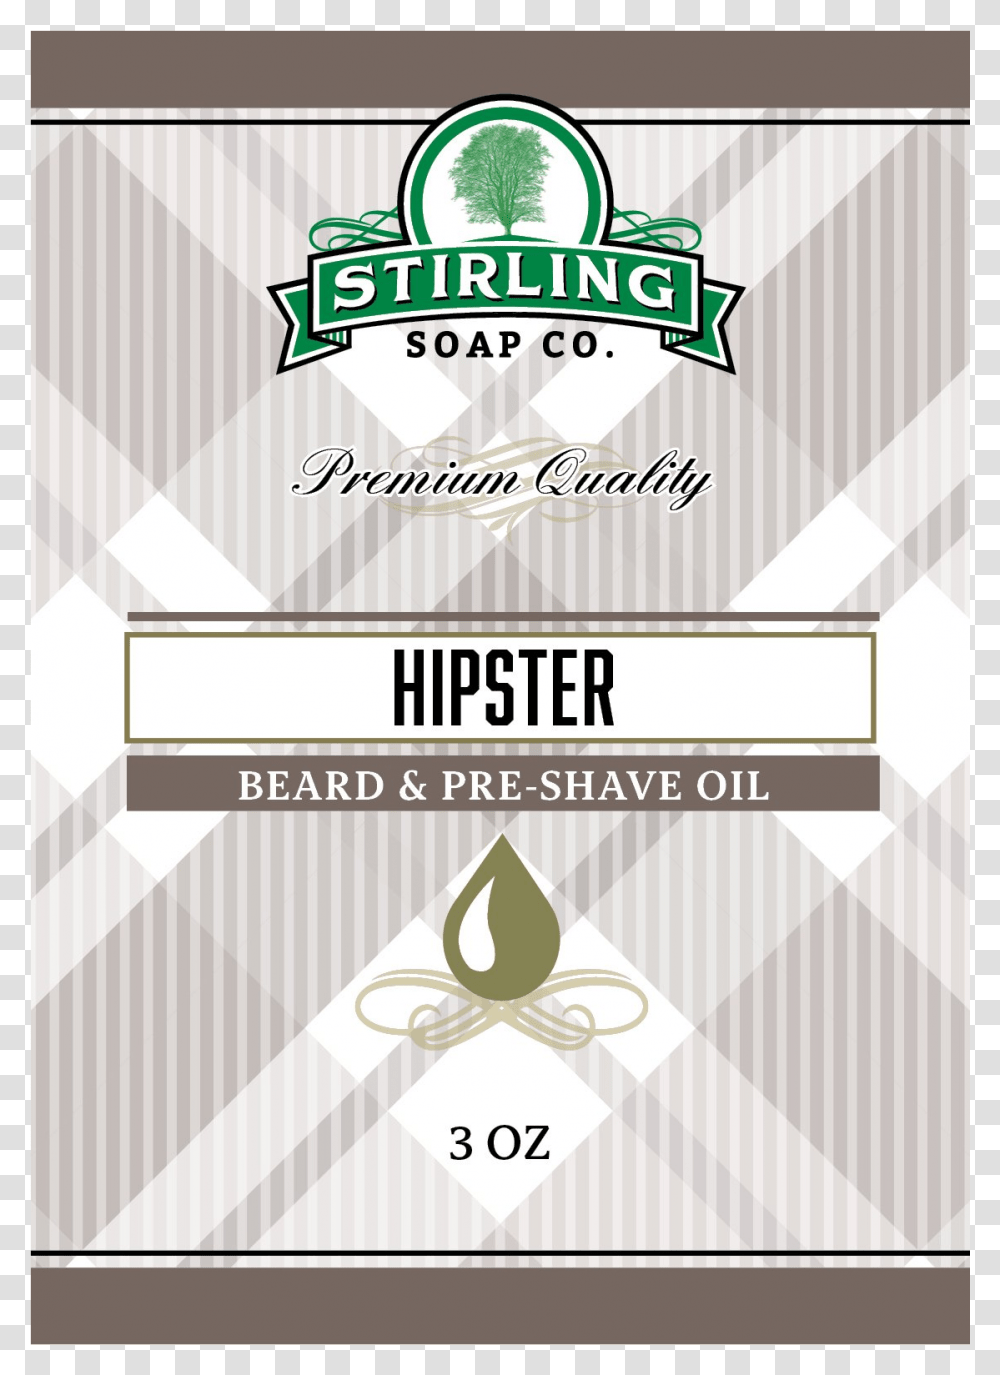 Stirling Soap Beard Amp Pre Shave Oil Hipster Domaine De Canton, Flyer, Poster, Paper, Advertisement Transparent Png